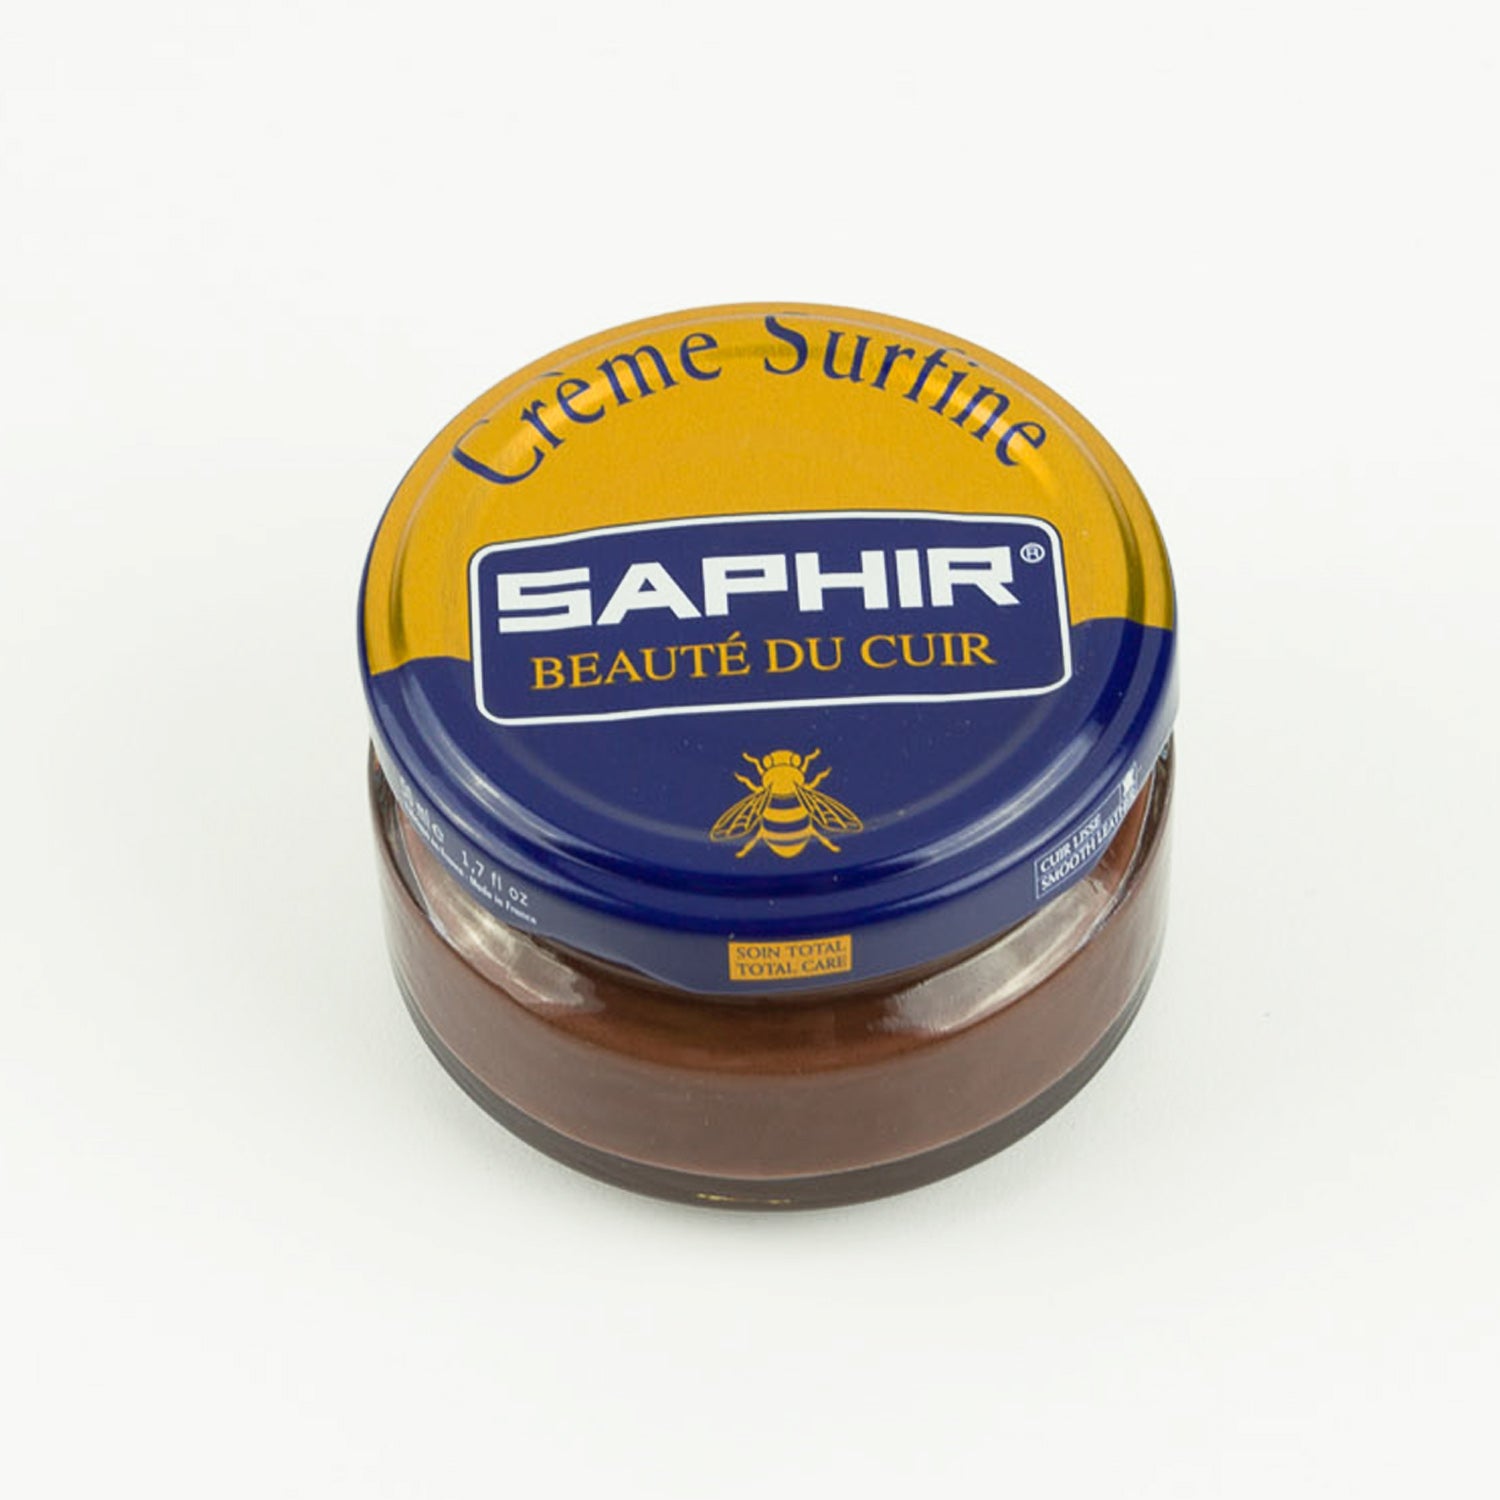 Saphir Beaute du Cuir Creme Surfine Shoe Polish 50ml Jar-08 Burgundy